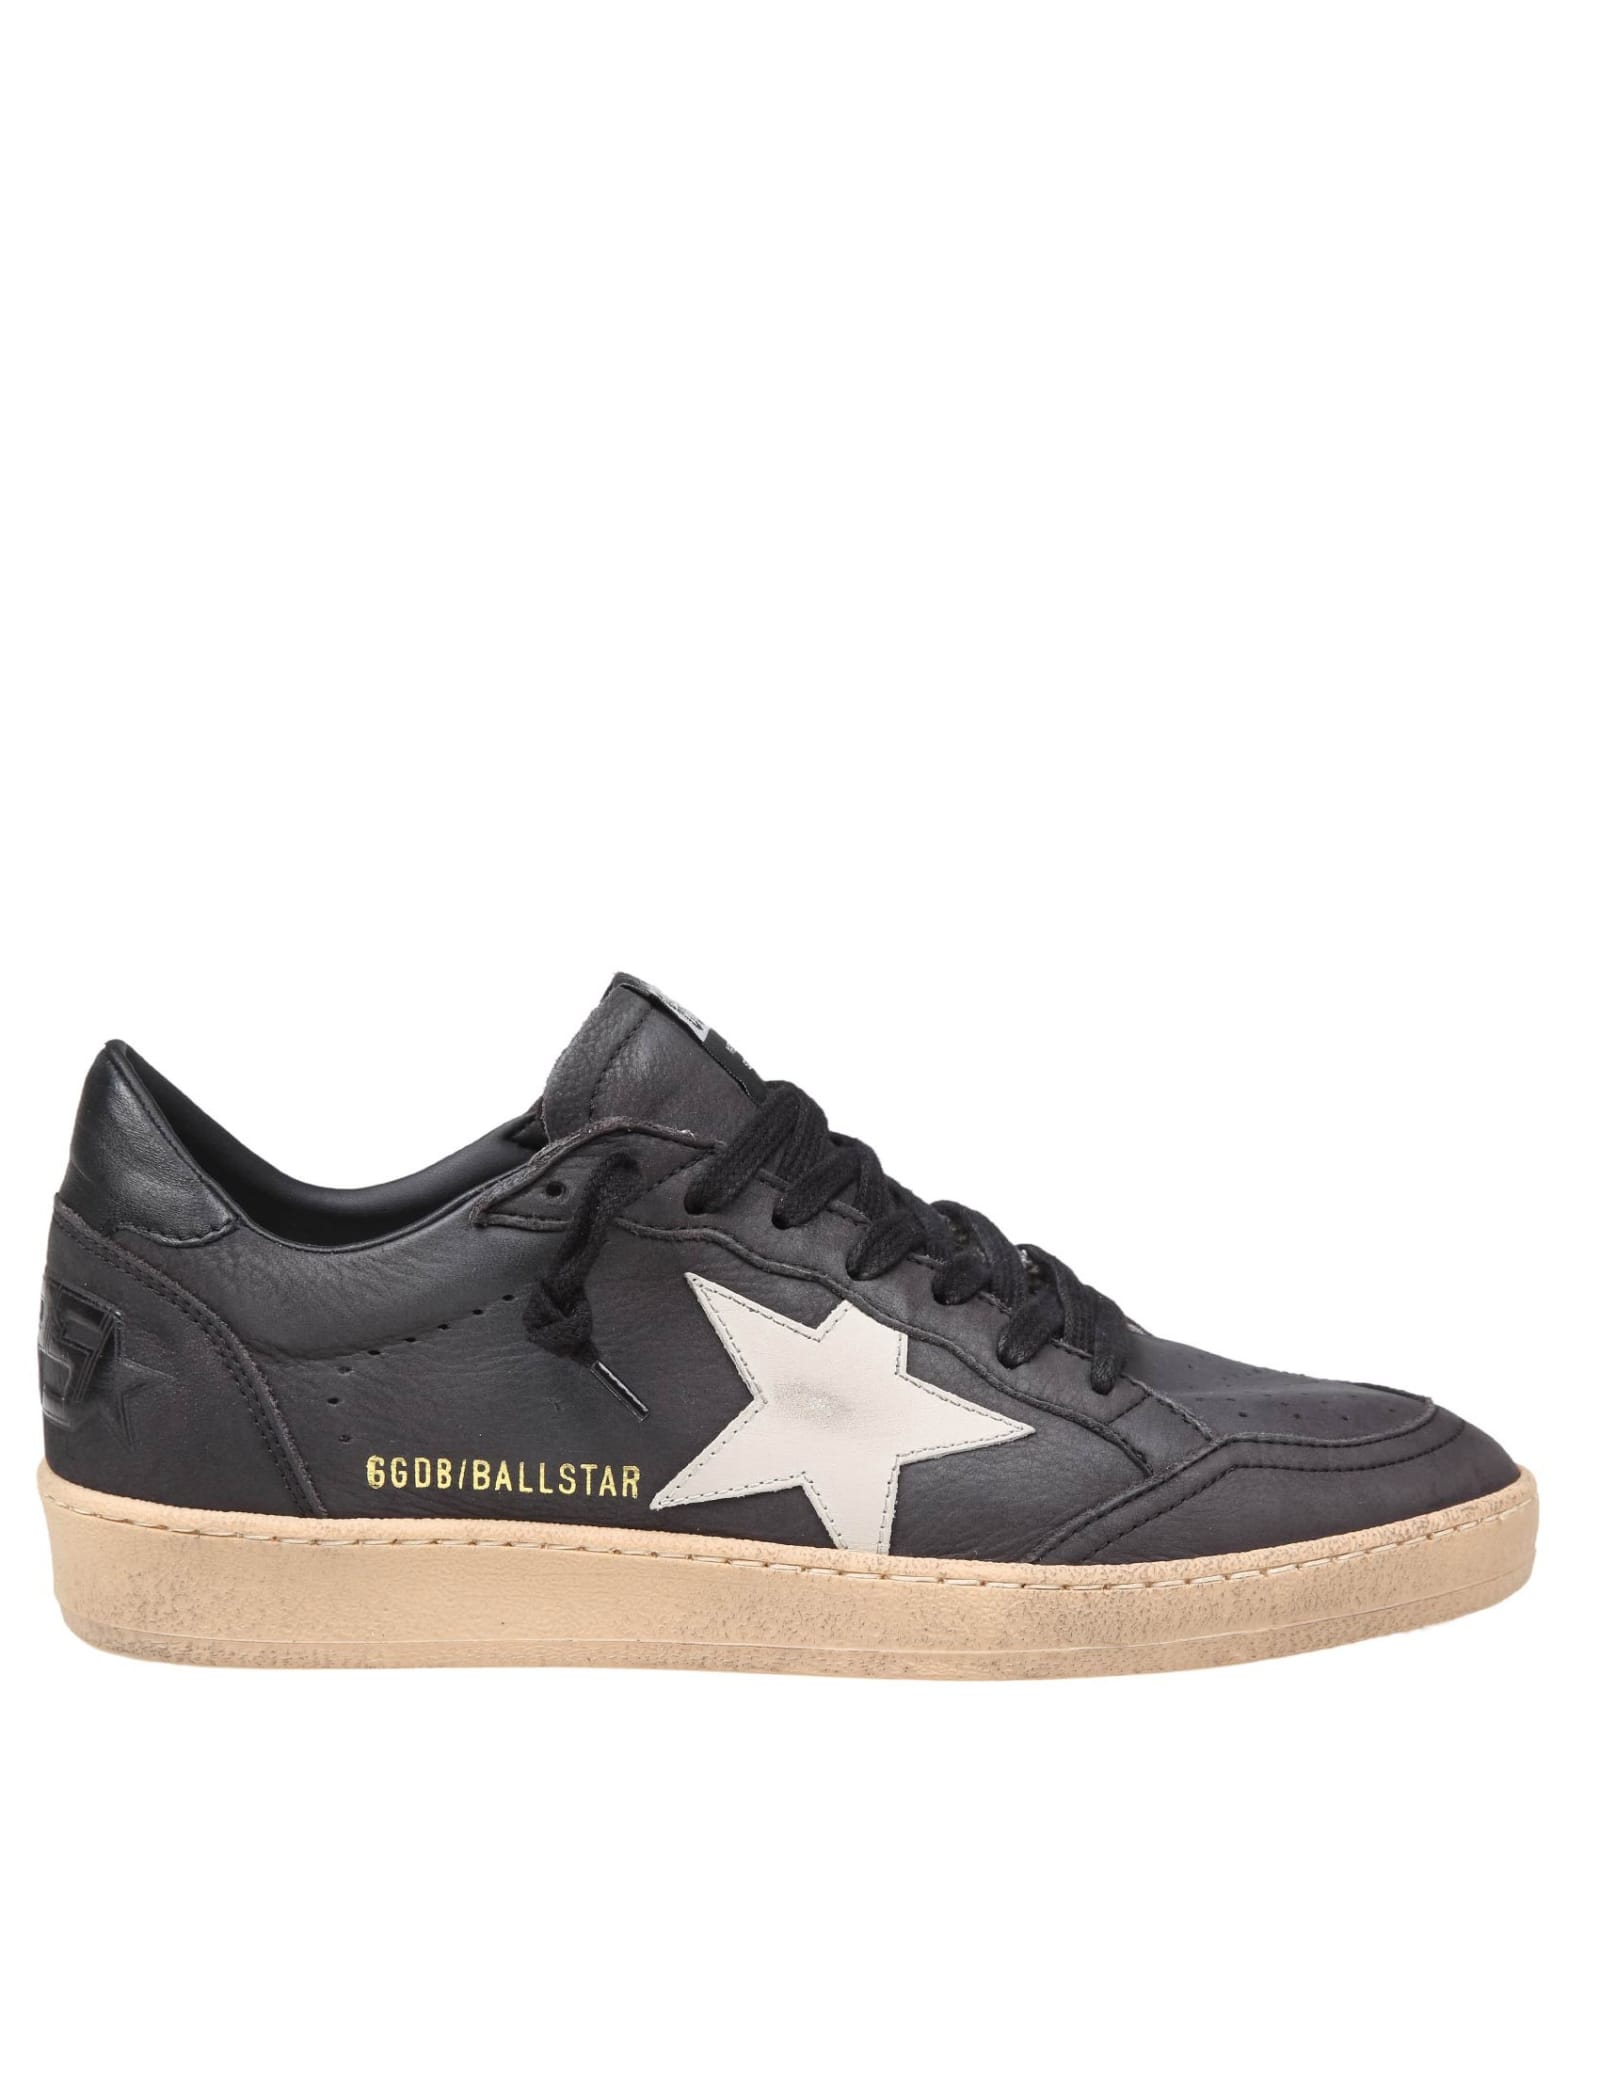 Ballstar Sneakers In Dark Gray Leather